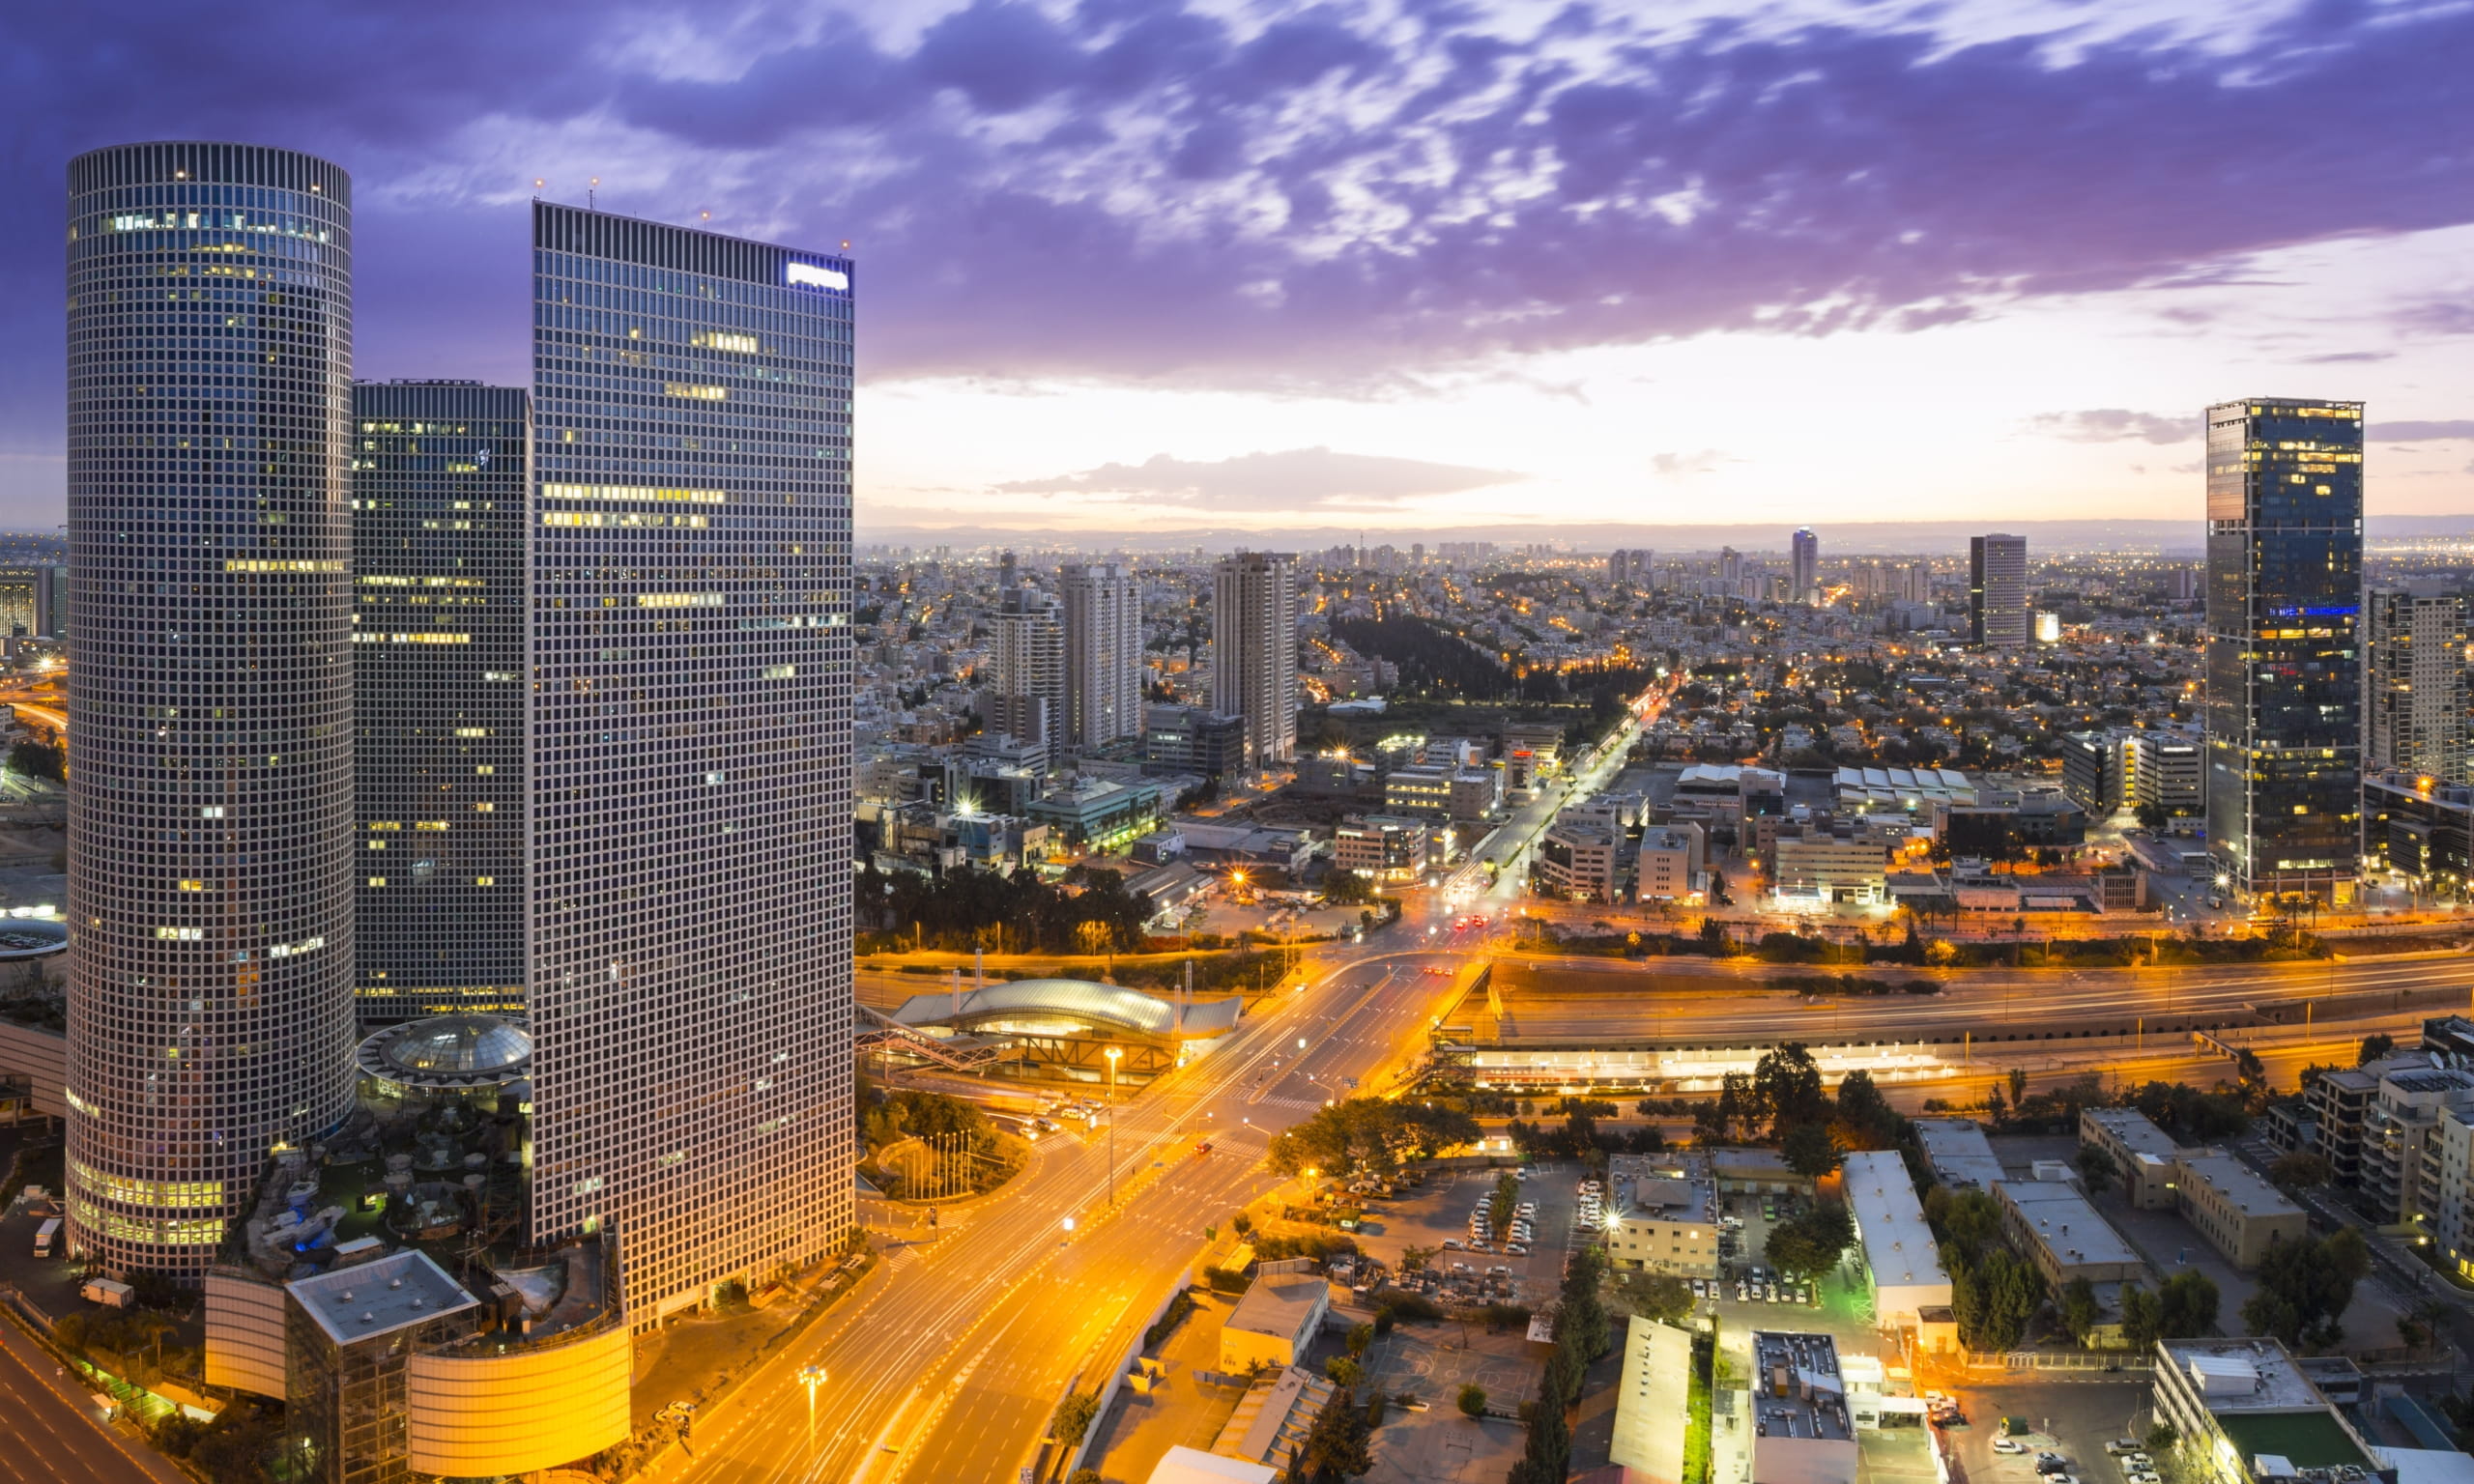 Tel Aviv at sunset